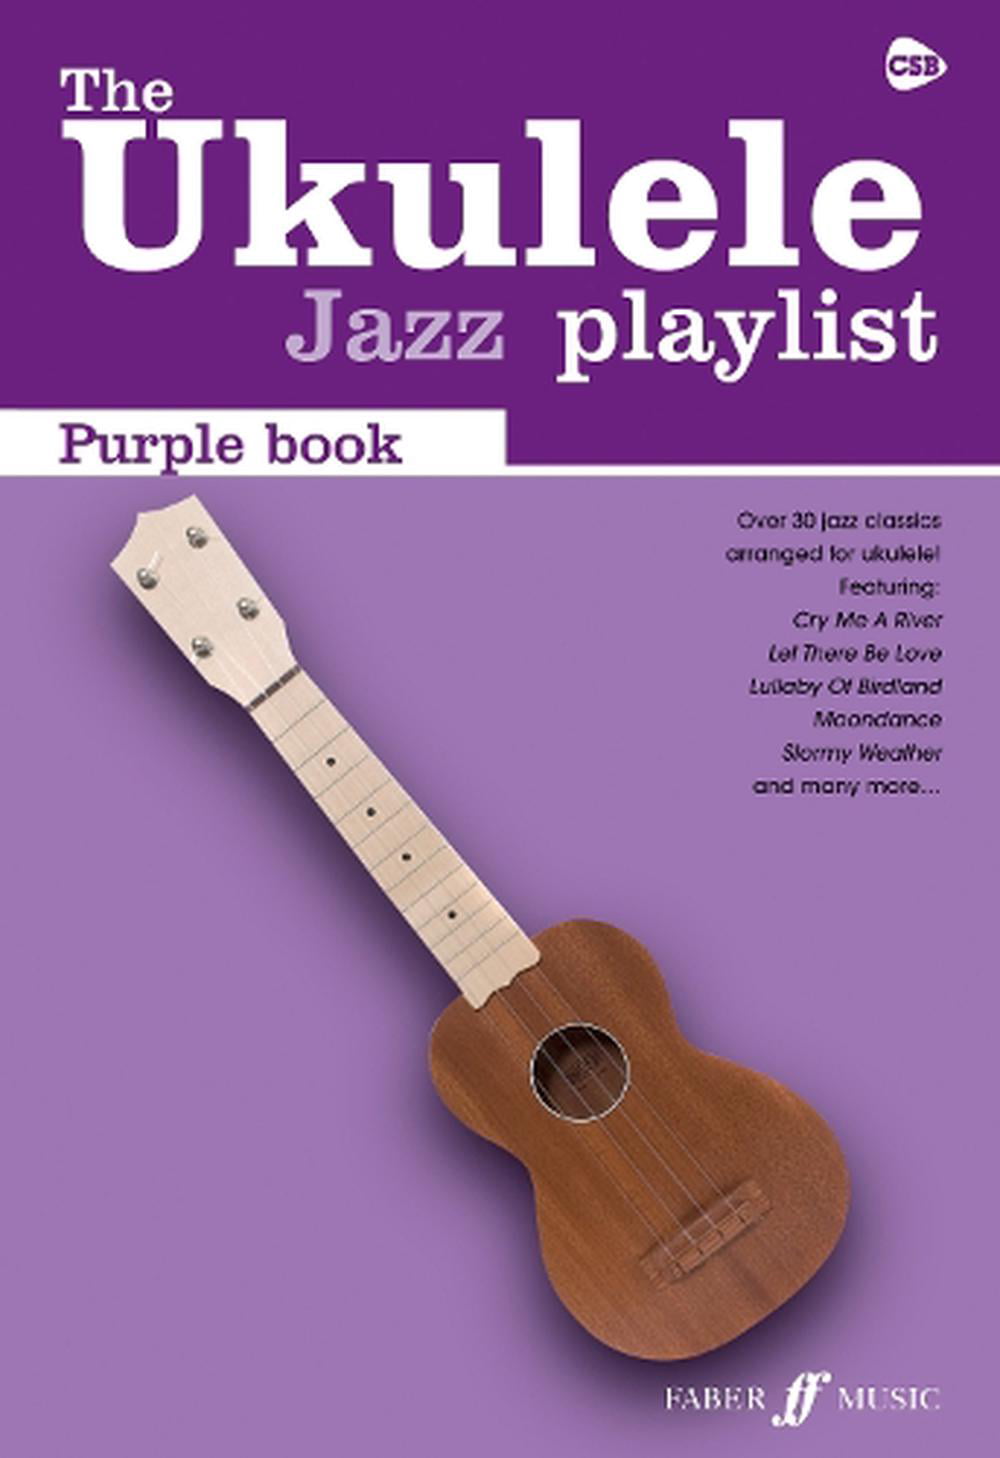 The Jazz Playlist : Purple Book: (Ukulele Chord Songbook) (Paperback) - Walmart.com